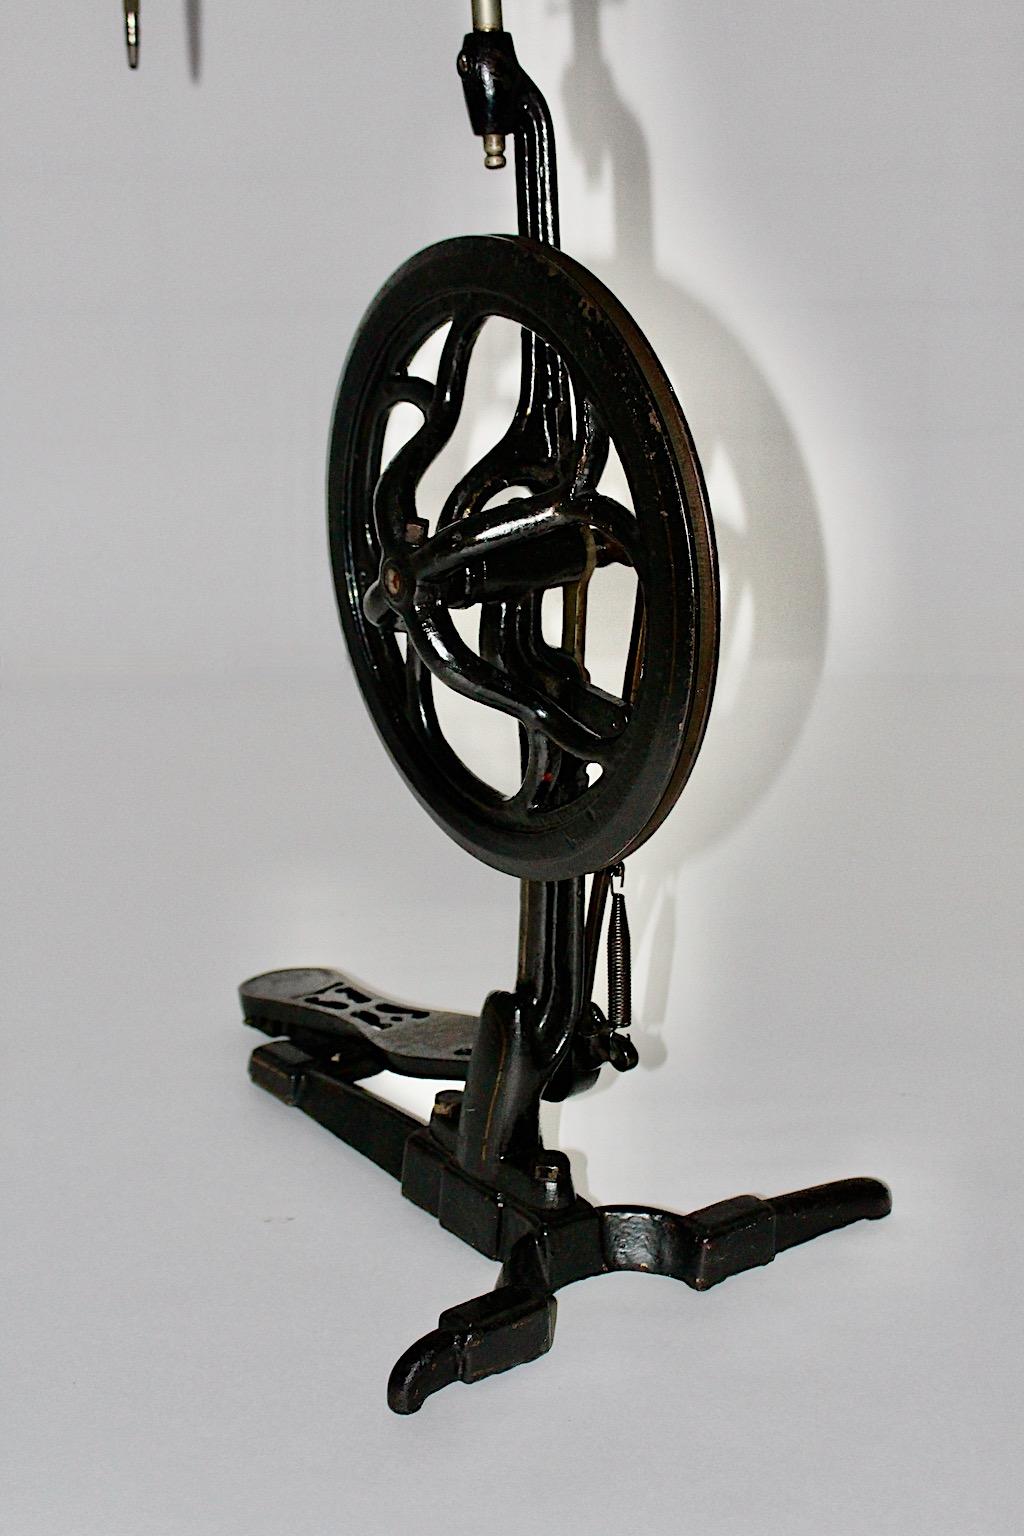 Austrian Industrial Design Science Vintage Black Cast Iron Dentist Machine 19th Century For Sale